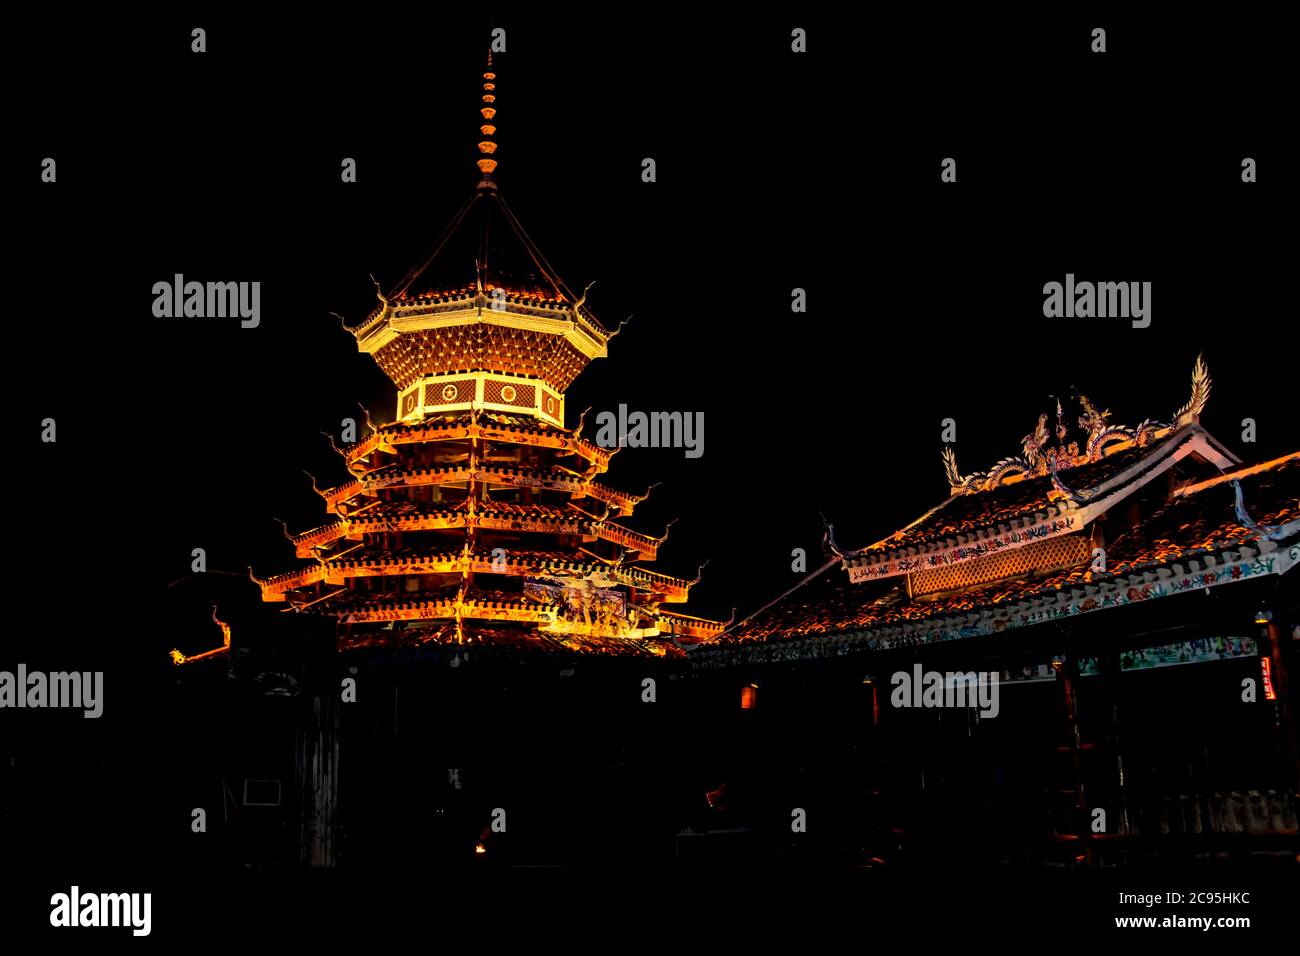 Illuminated Pagoda at night Photographed in China Stock Photo